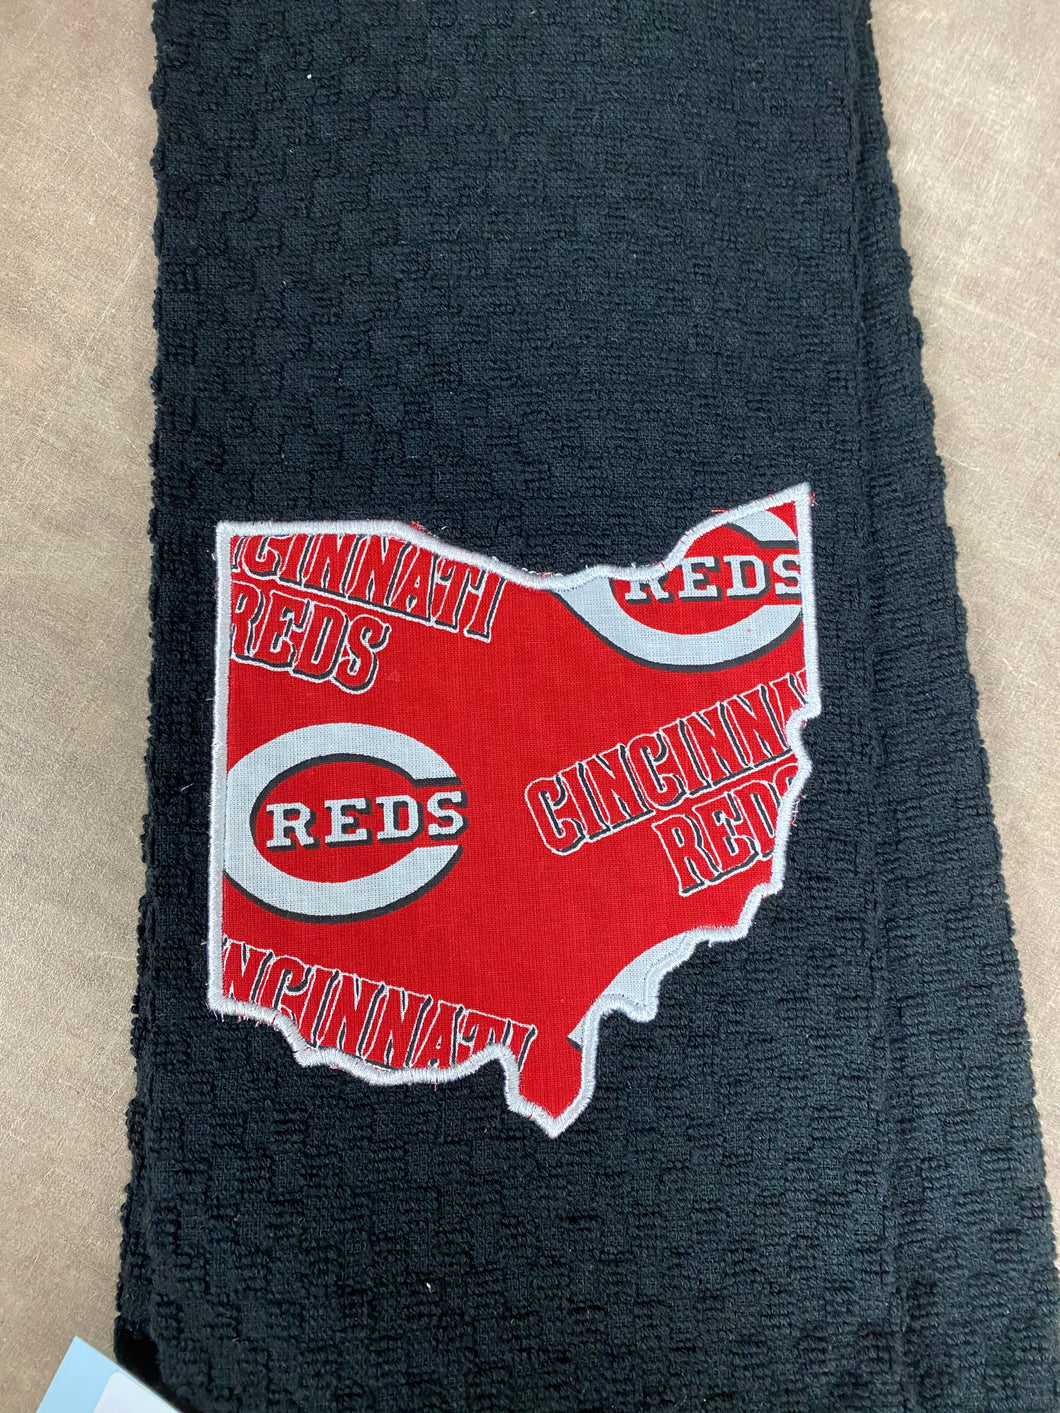 Ohio Towel Cinci Reds